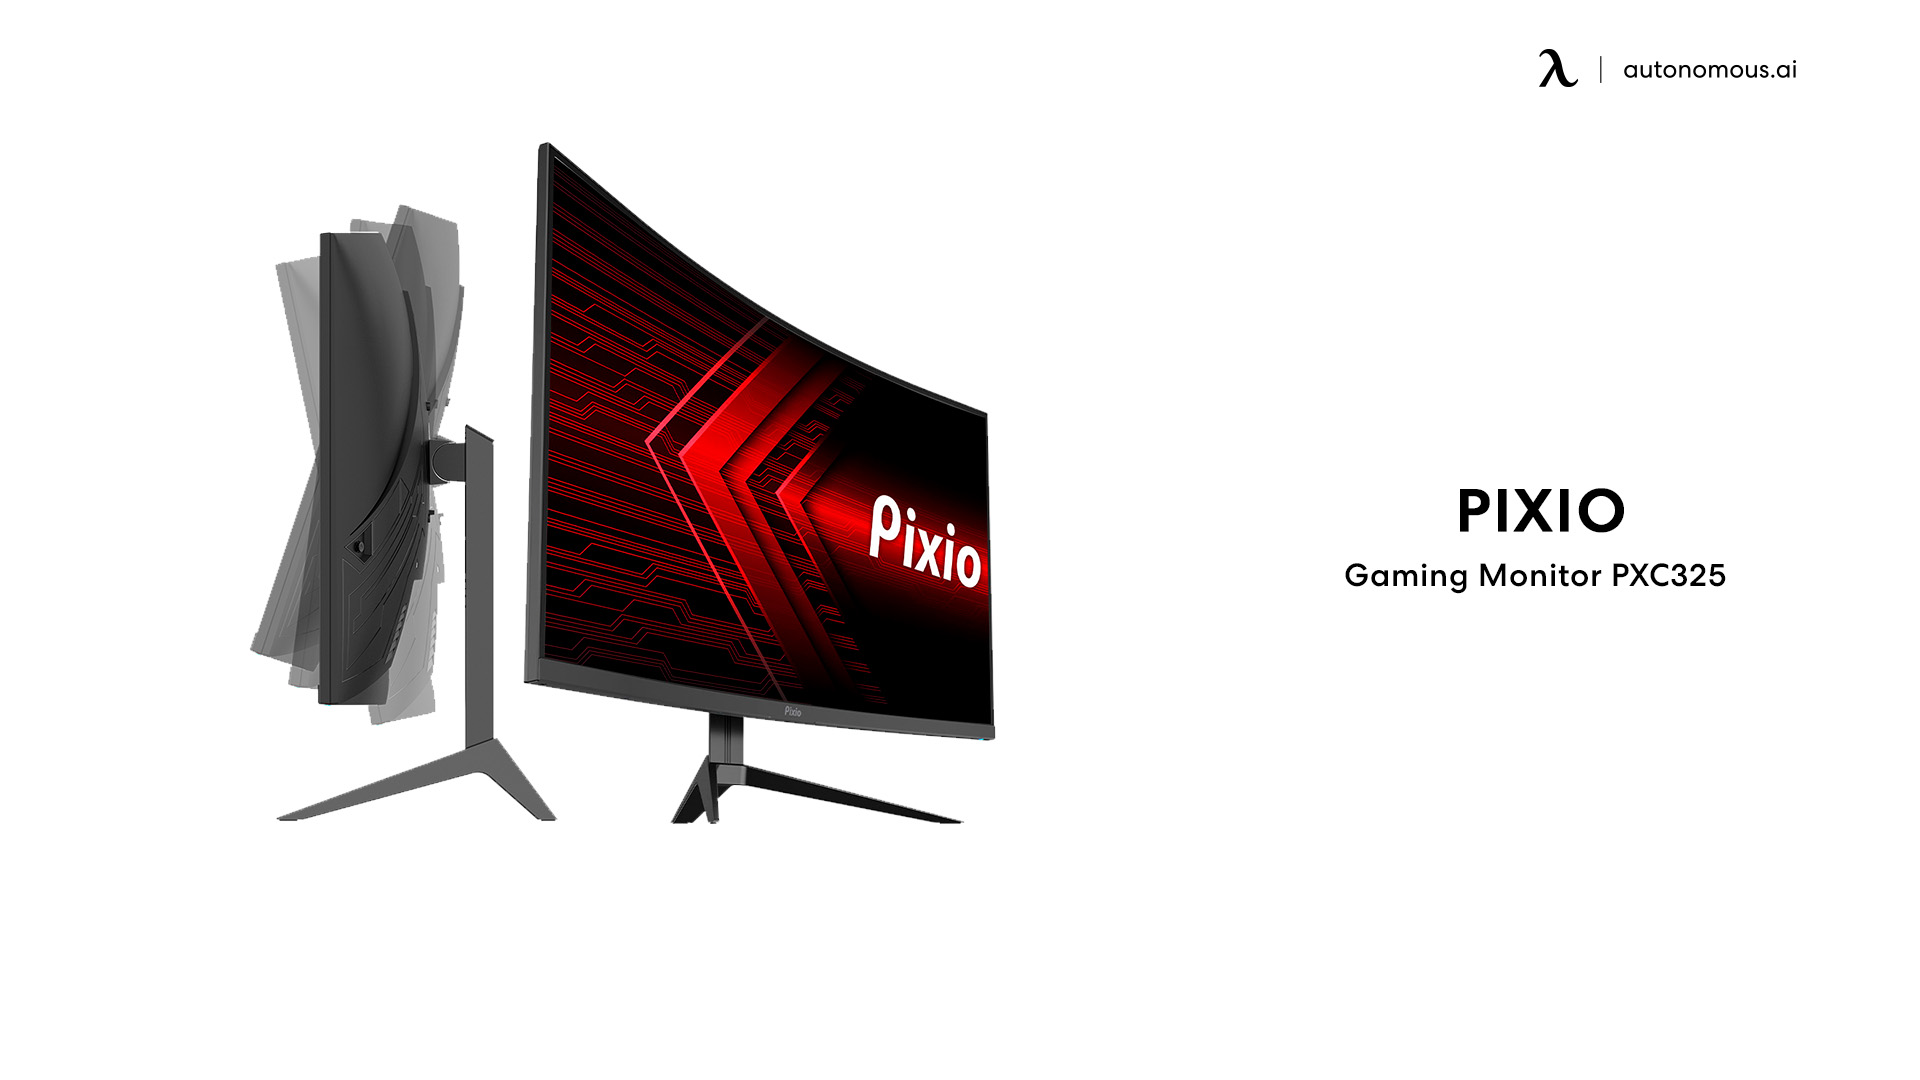 Pixio 32-inch Gaming Monitor PXC325